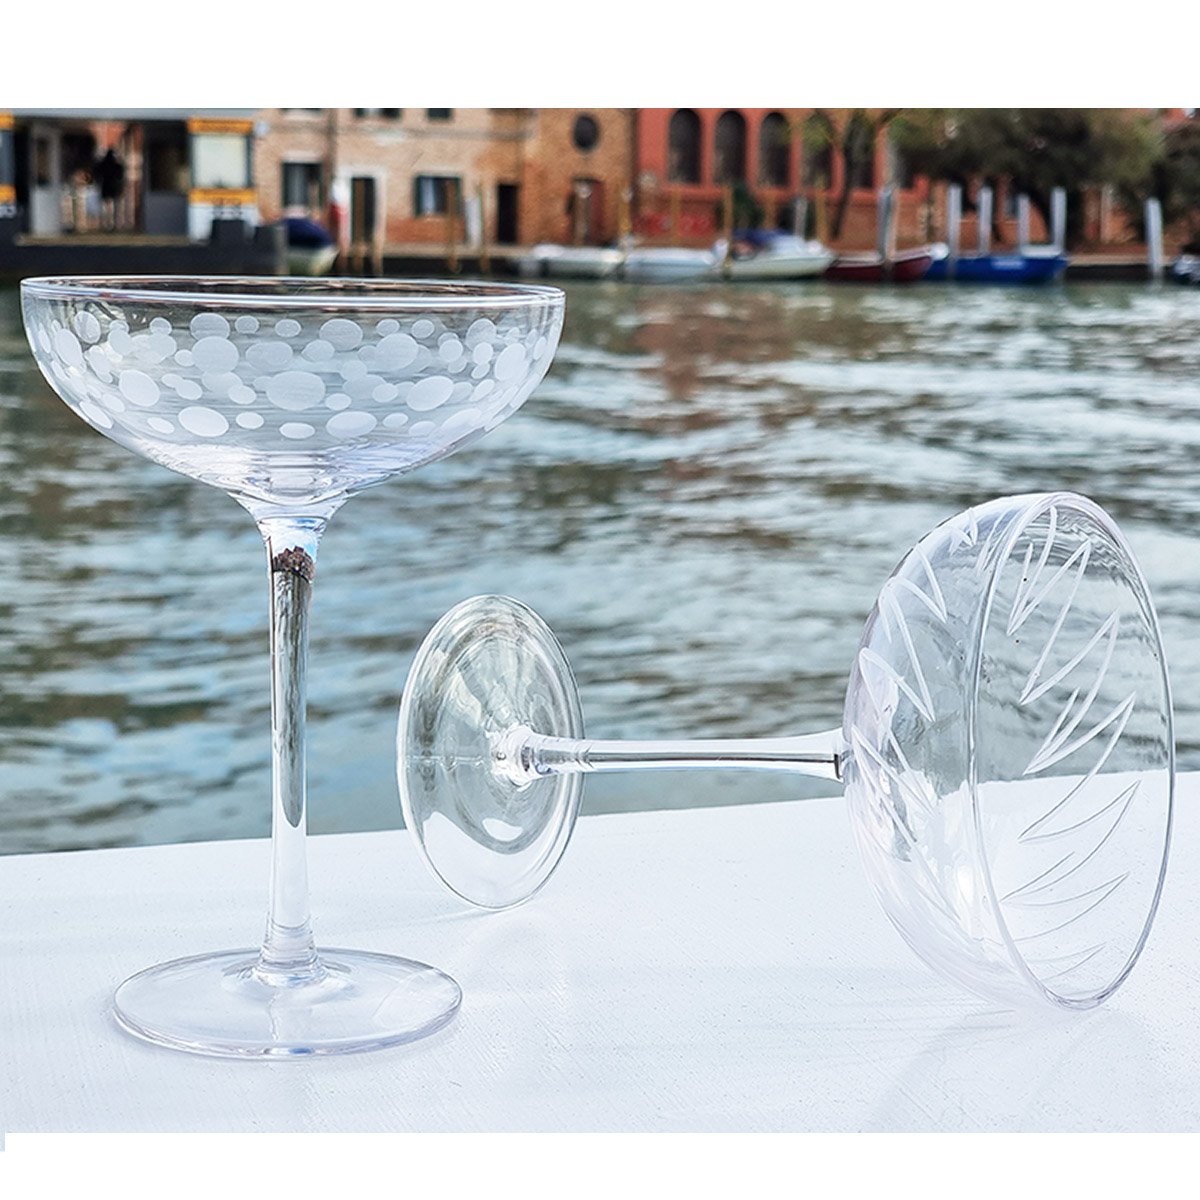 Picasso Murano Glass Stemless Wine Glass, Made in Murano